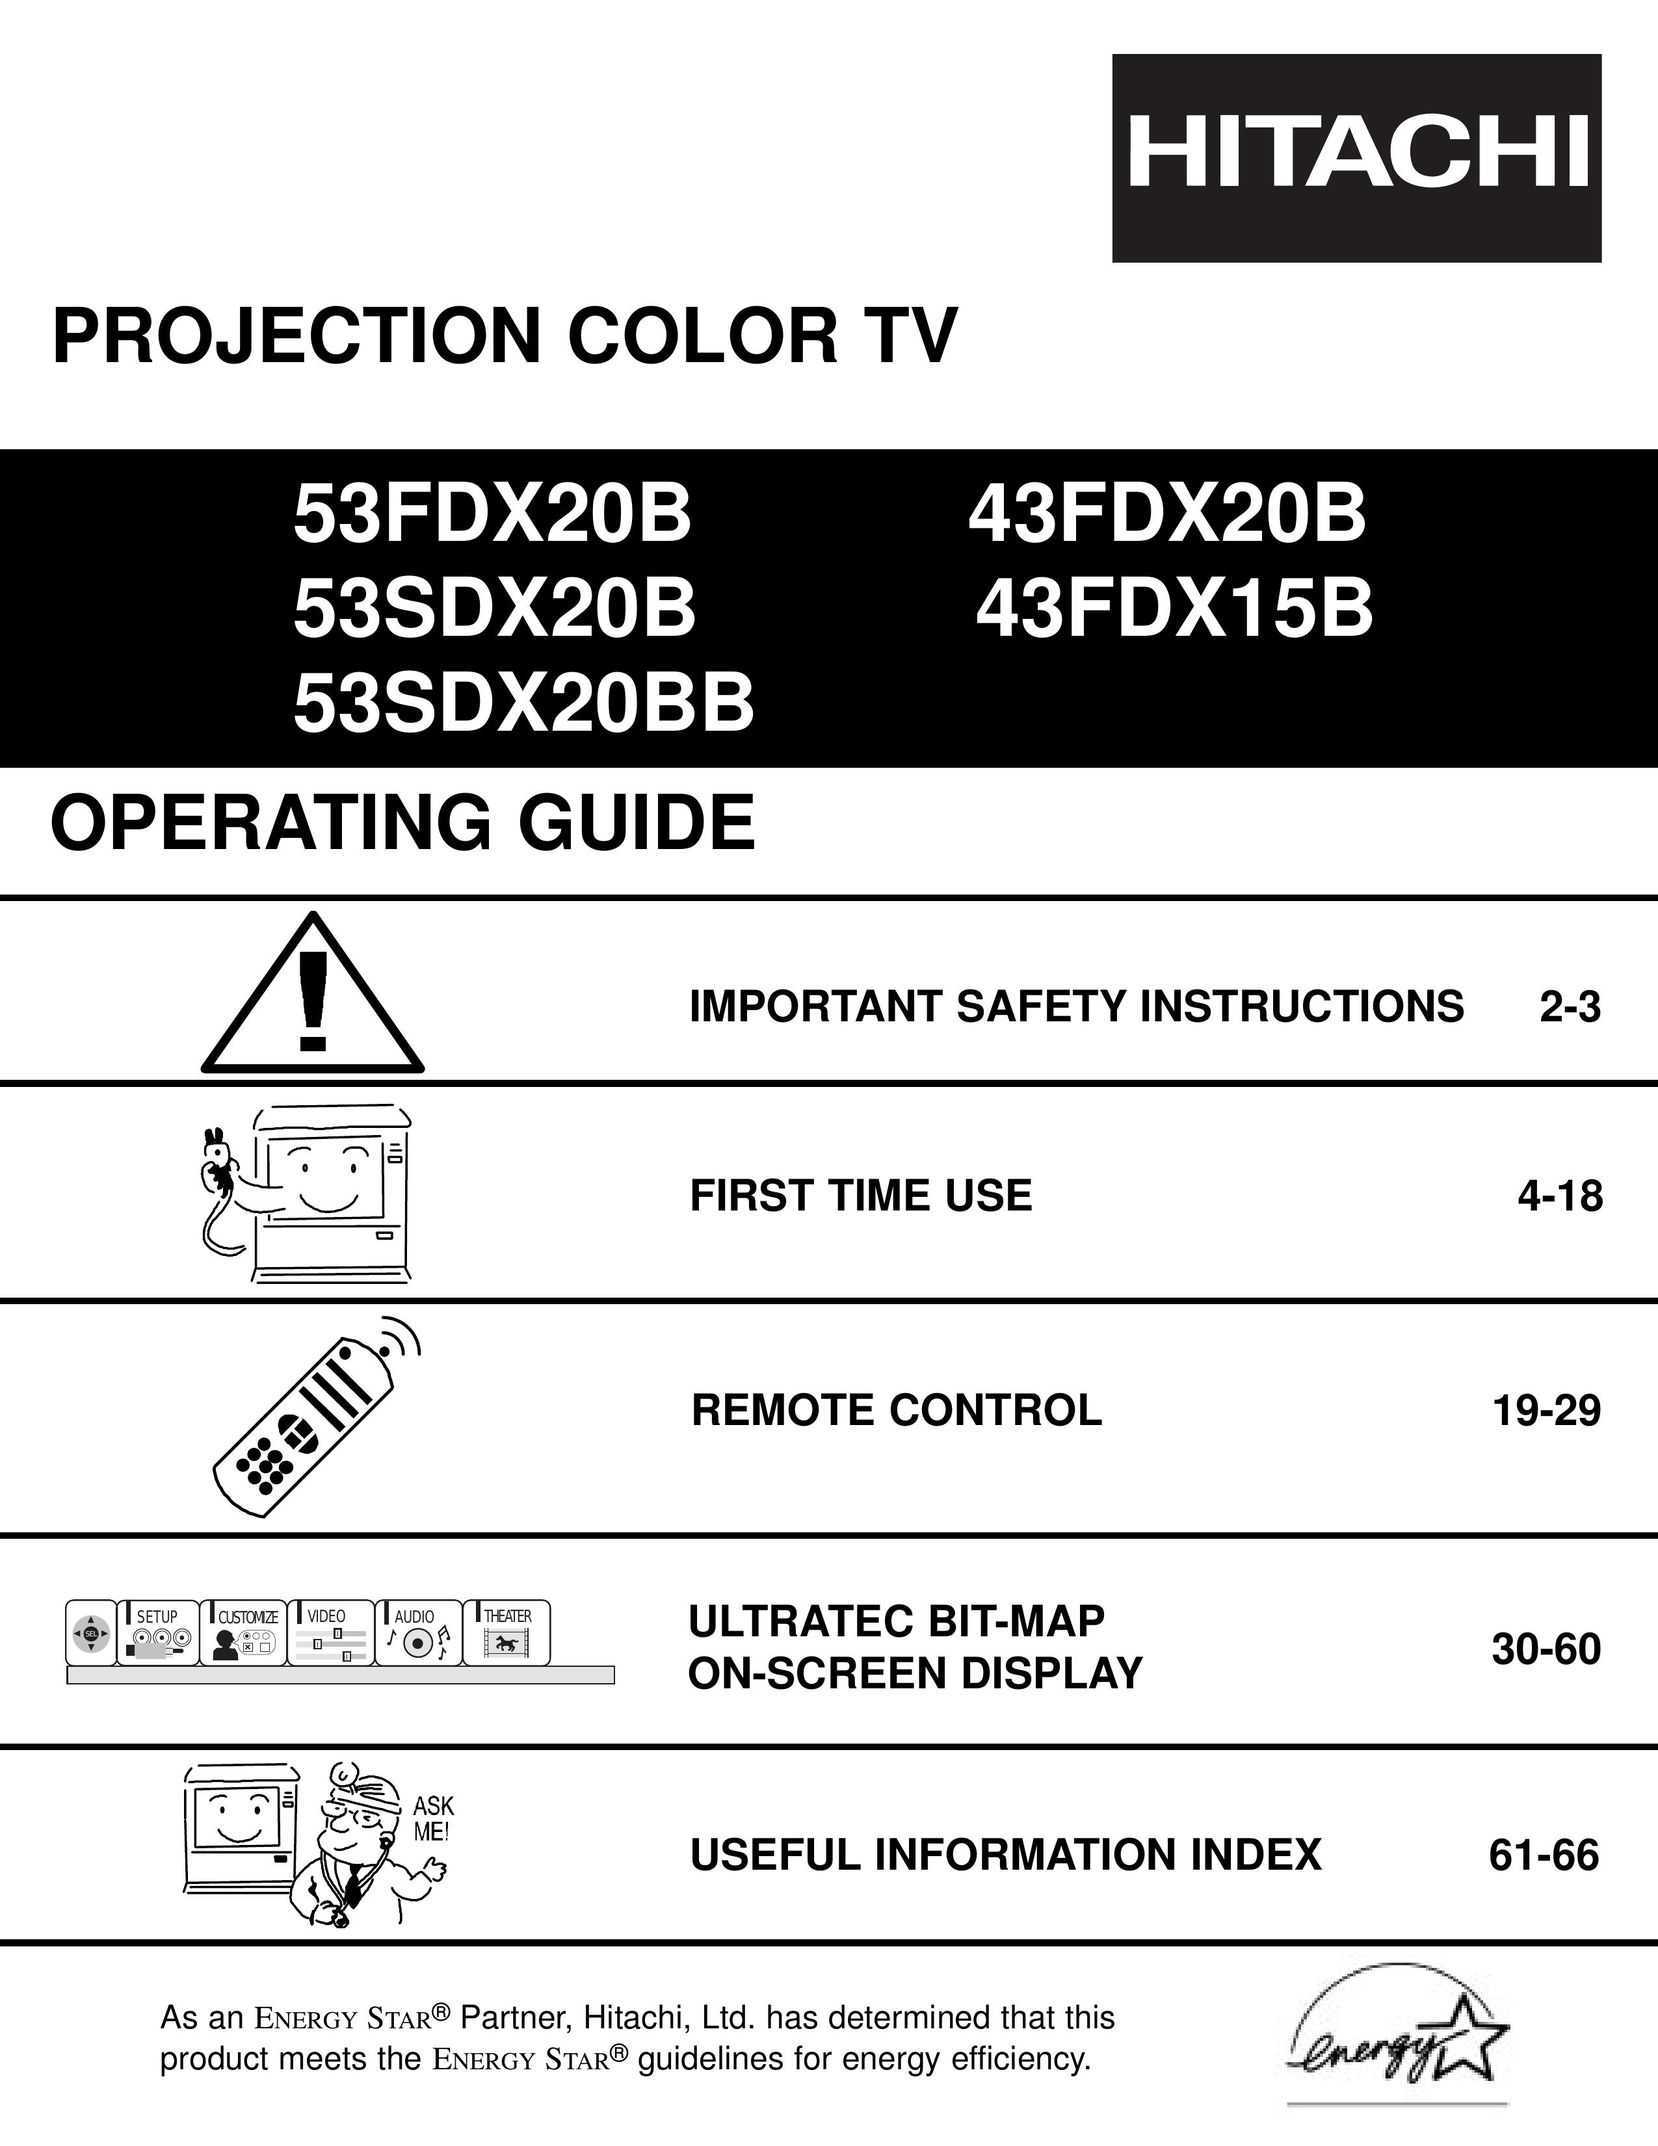 Hitachi 43FDX20B Projection Television User Manual